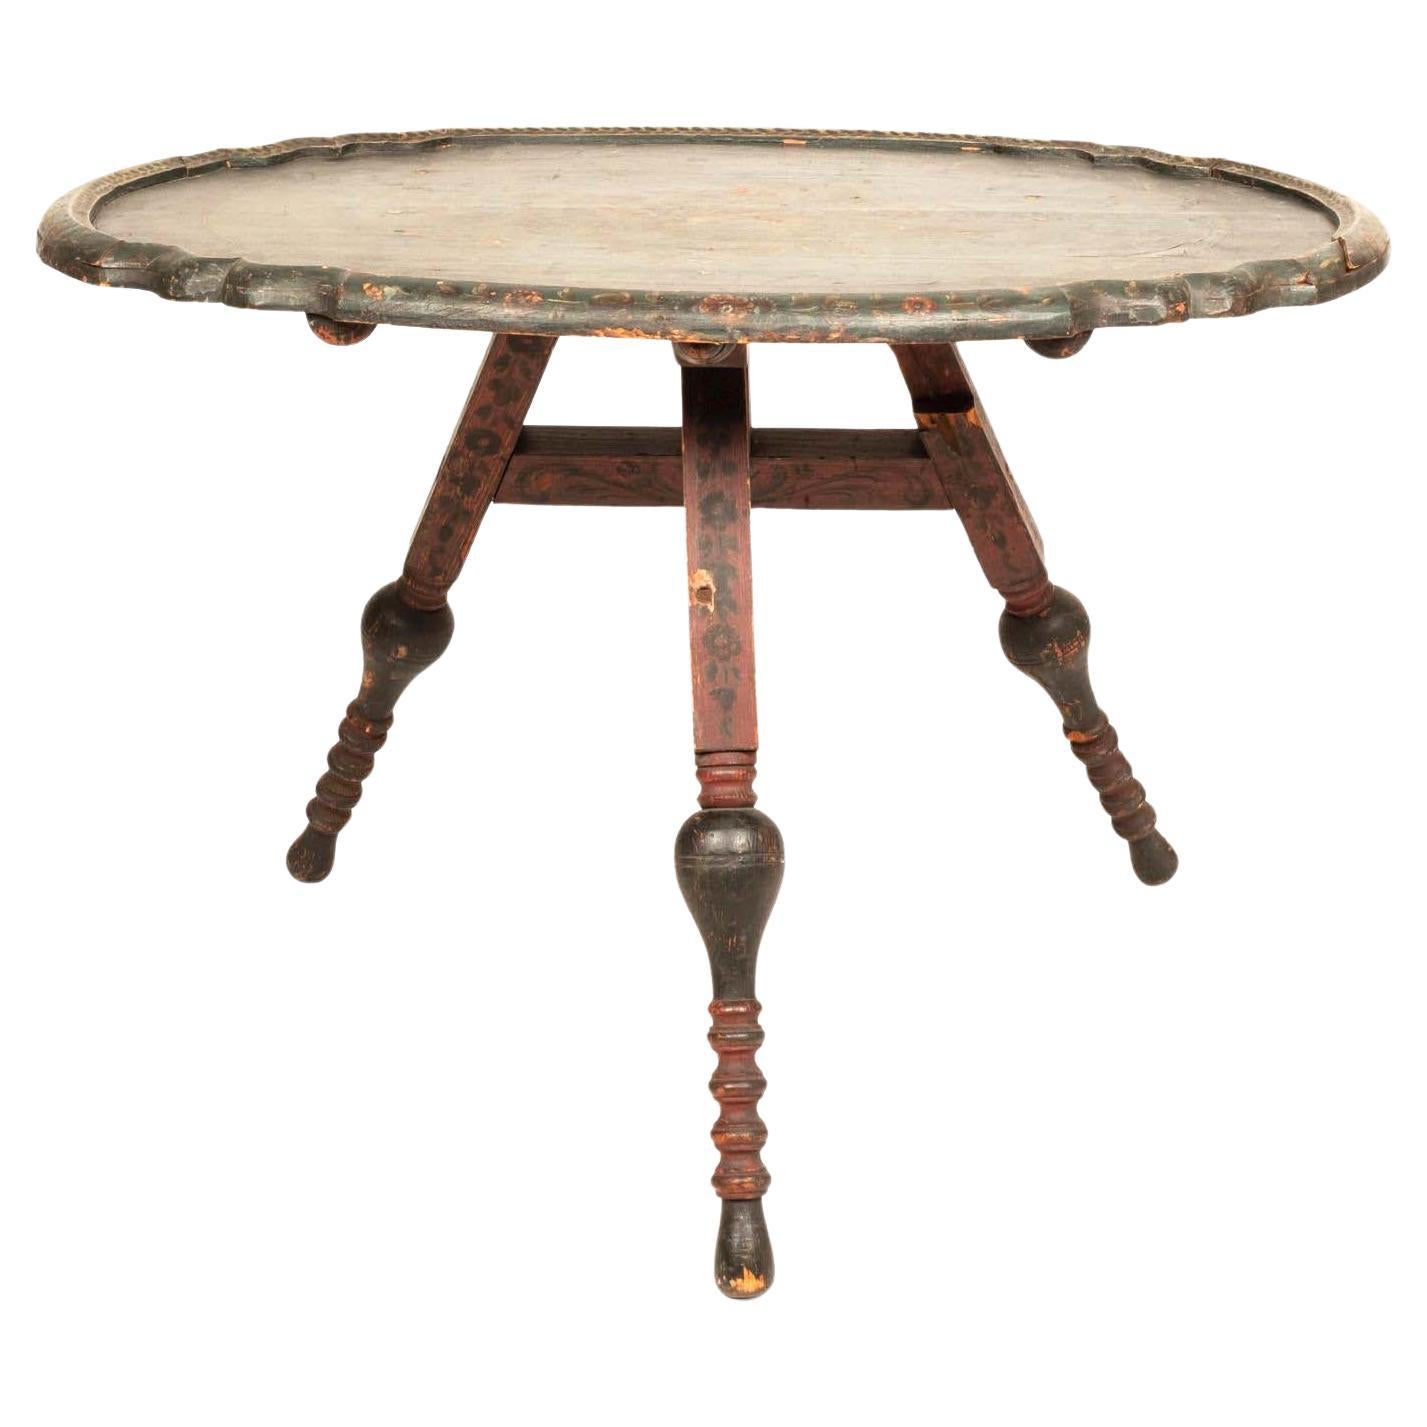 Antique Dutch Green Painted Low Oval Tilt Top Table